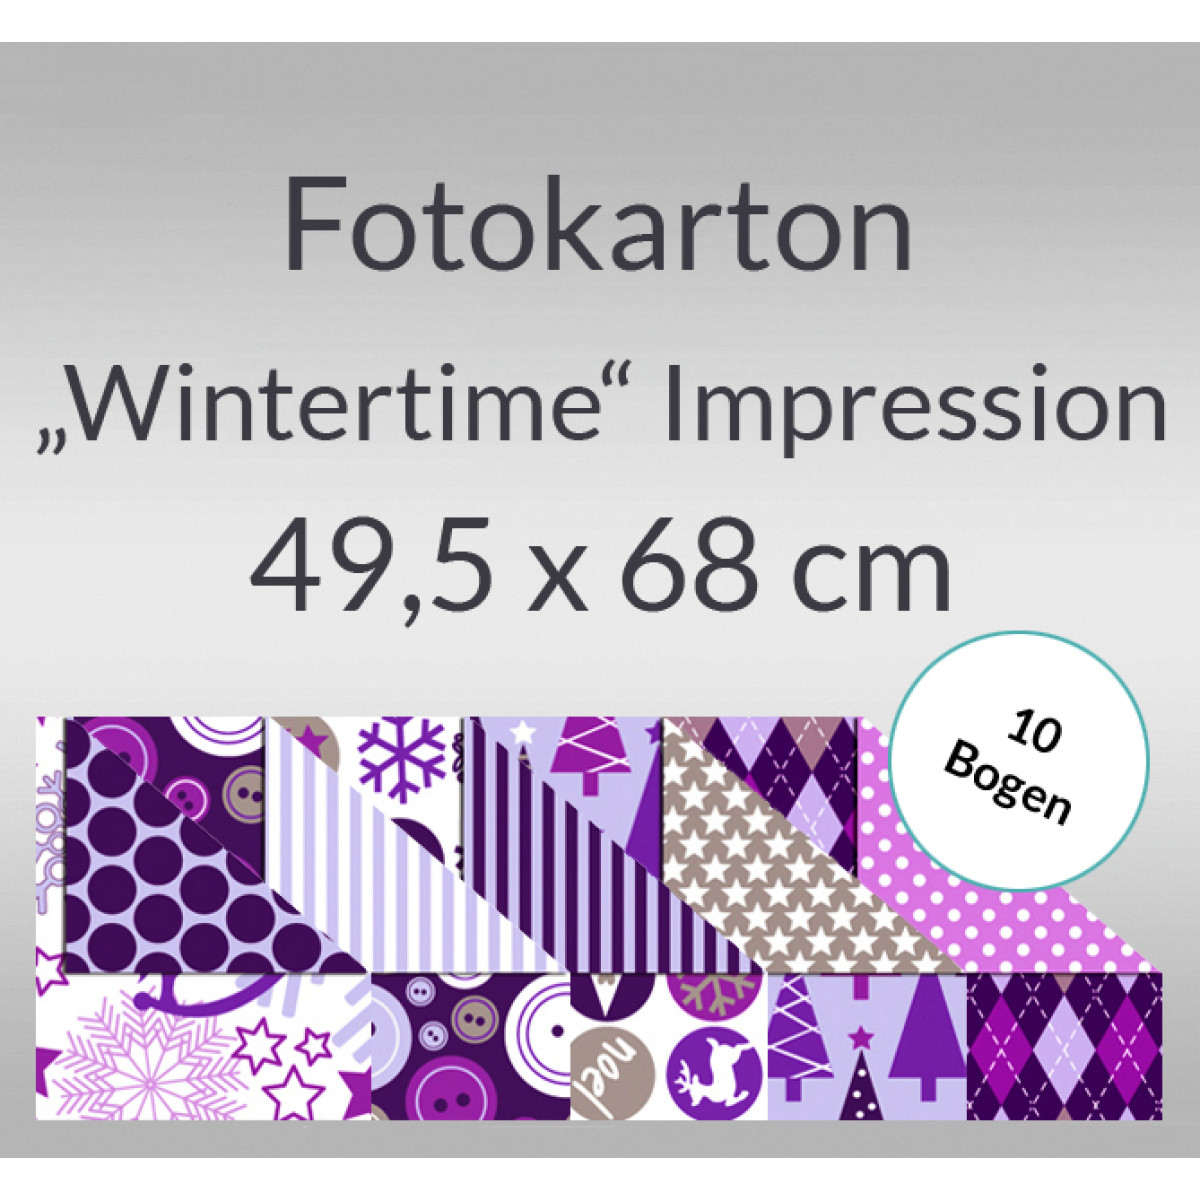 Fotokarton "Wintertime" Impression 49,5 x 68 cm - 10 Bogen